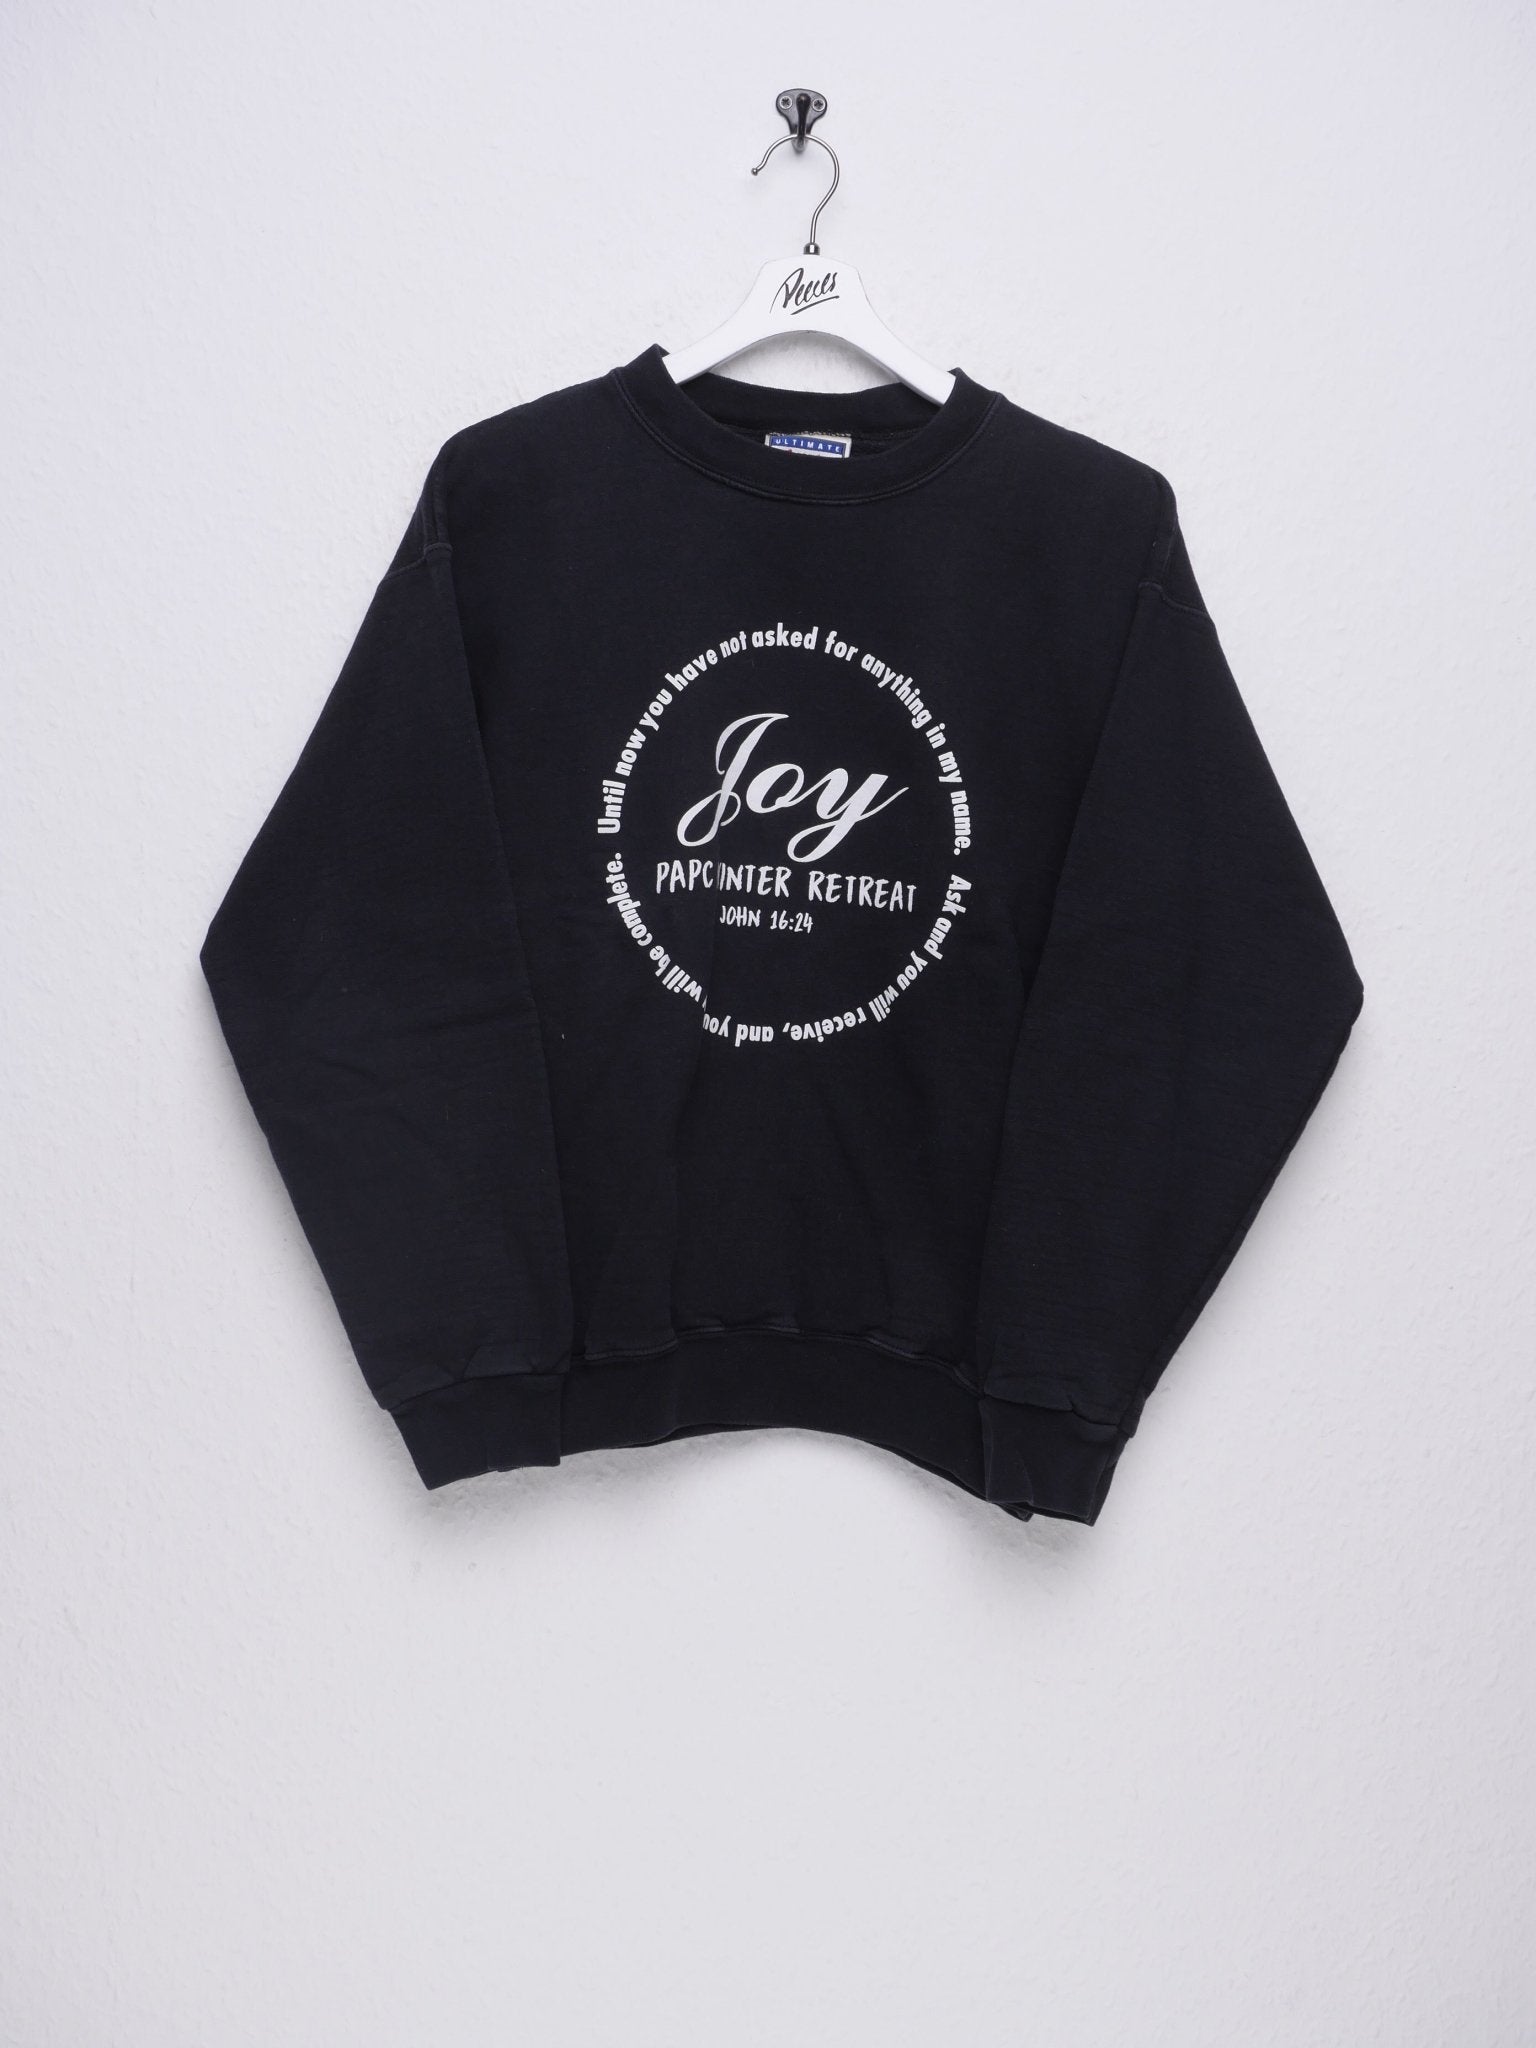 Joy printed Spellout Vintage Sweater - Peeces